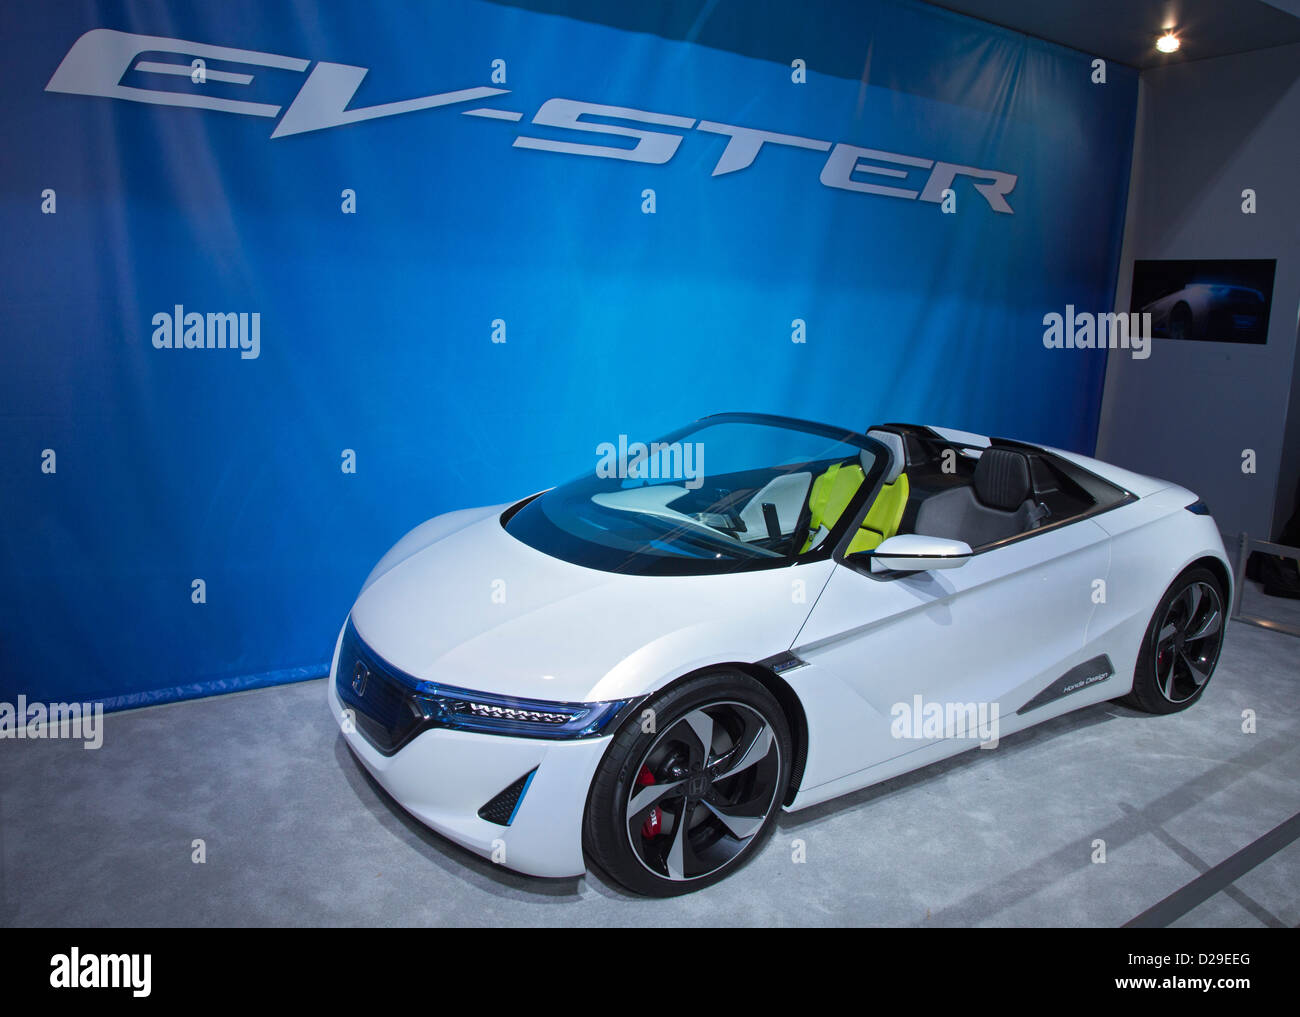 Detroit Michigan The Honda Ev Ster An Electric Concept Sports Car Stock Photo Alamy